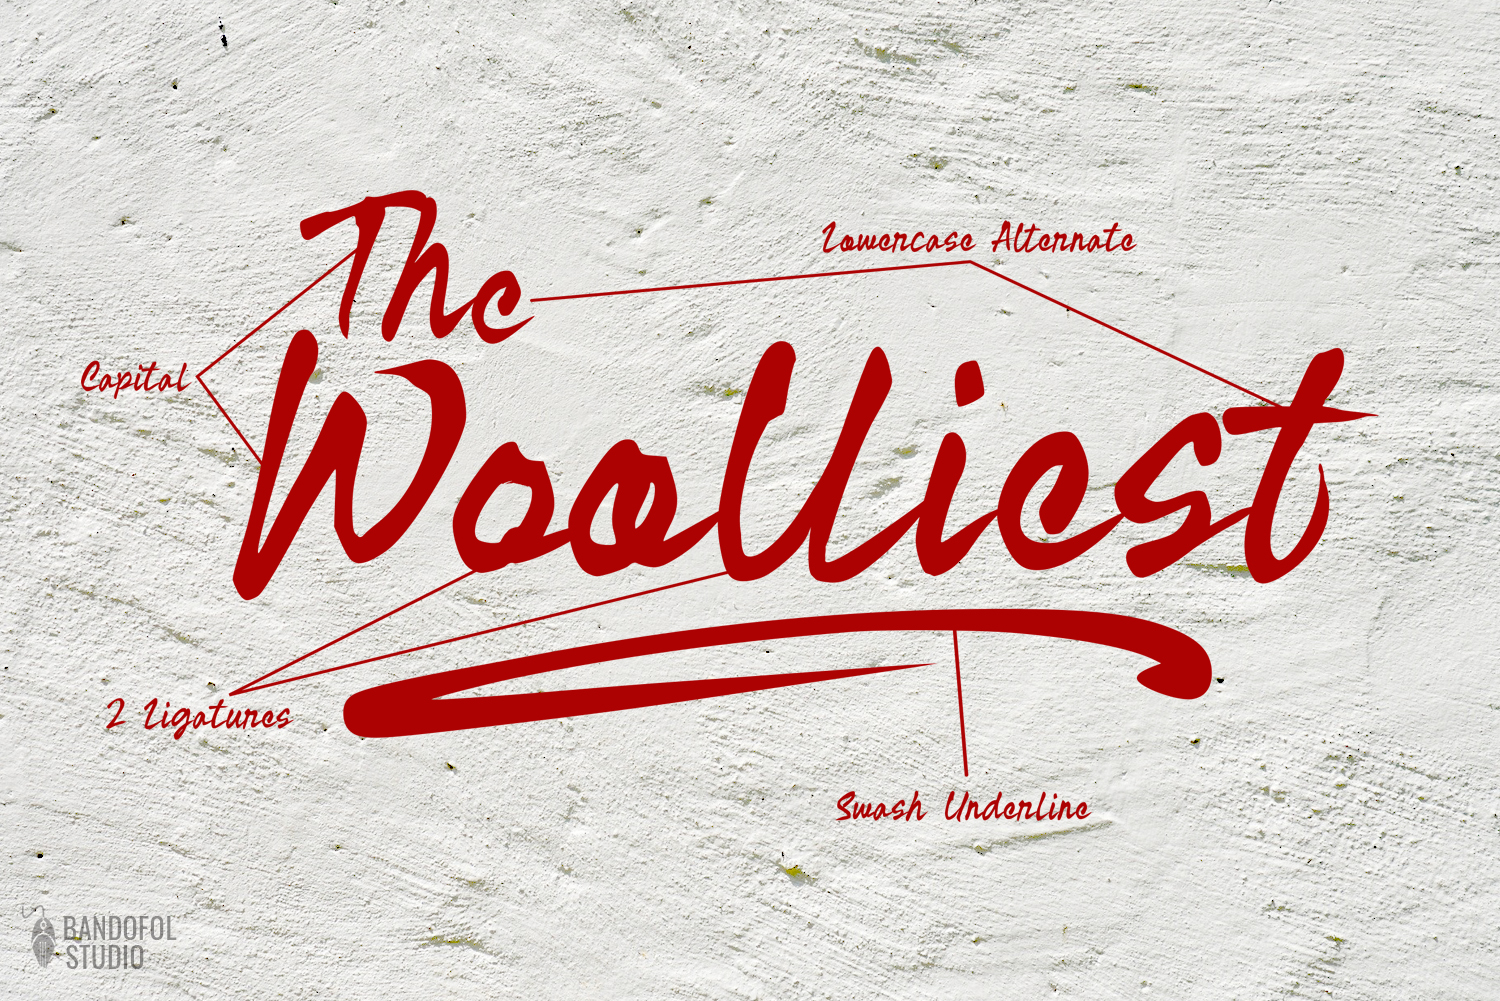 Woolliest